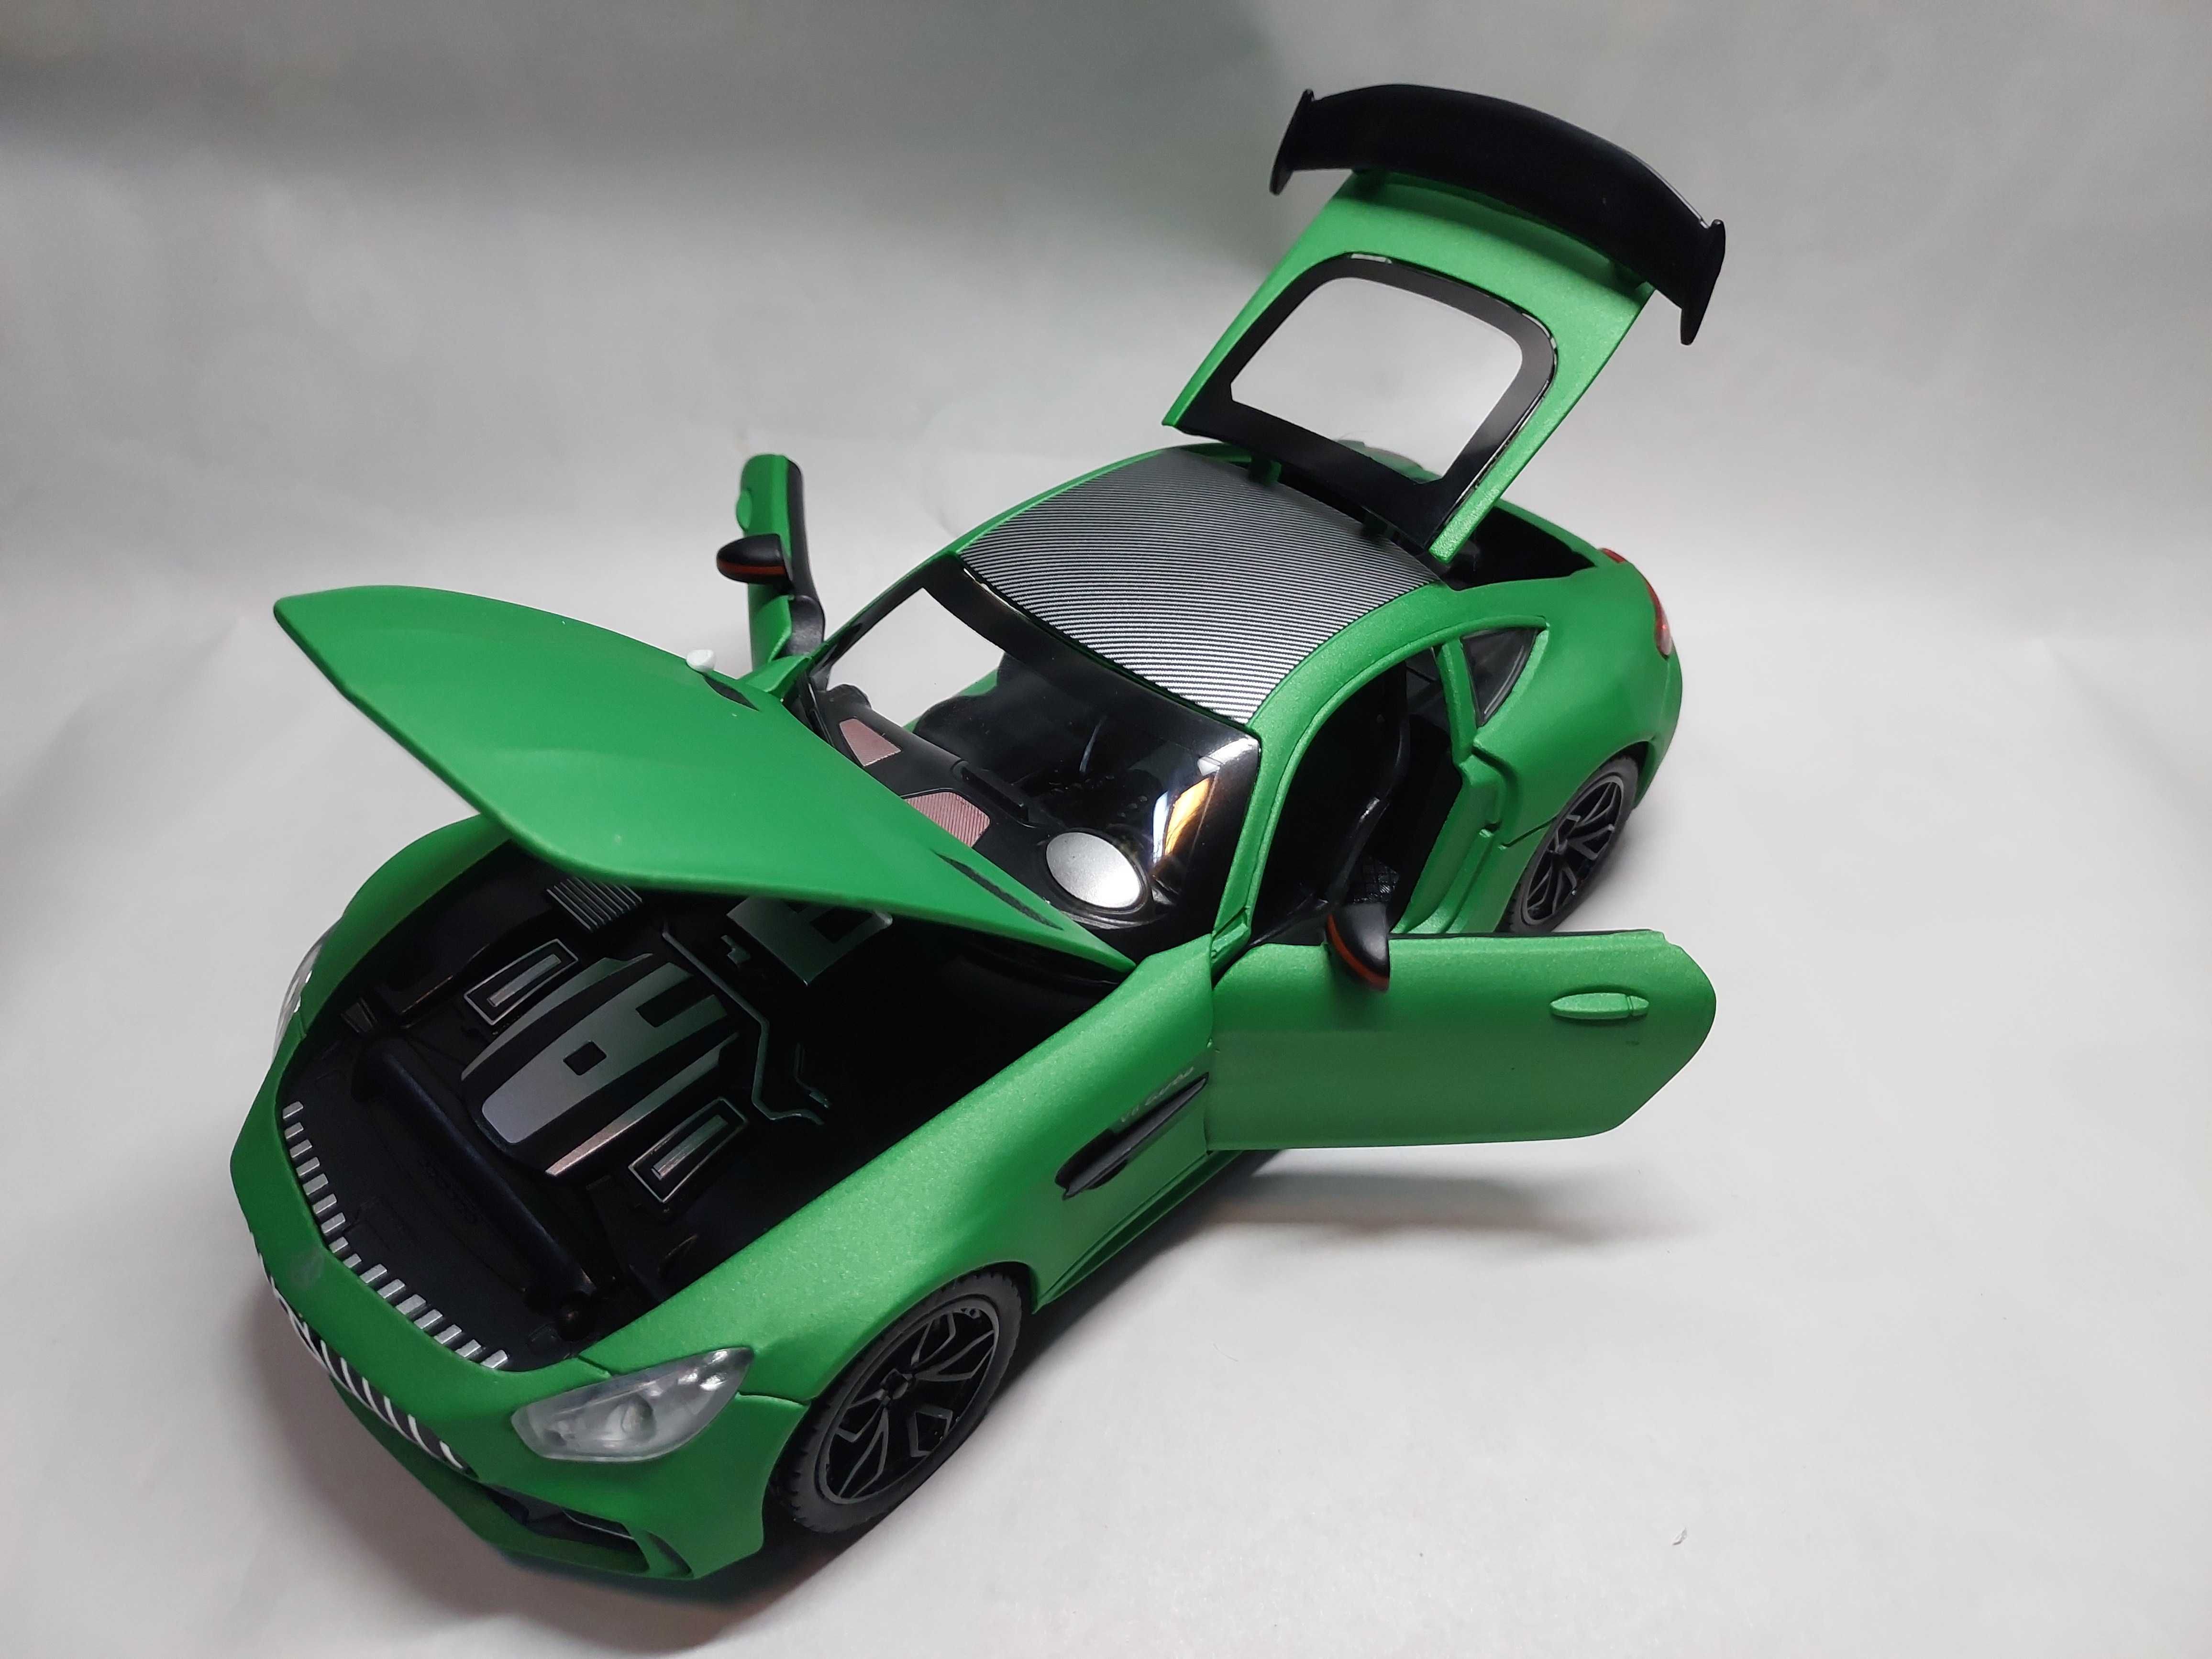 Macheta metal Mercedes Amg verde